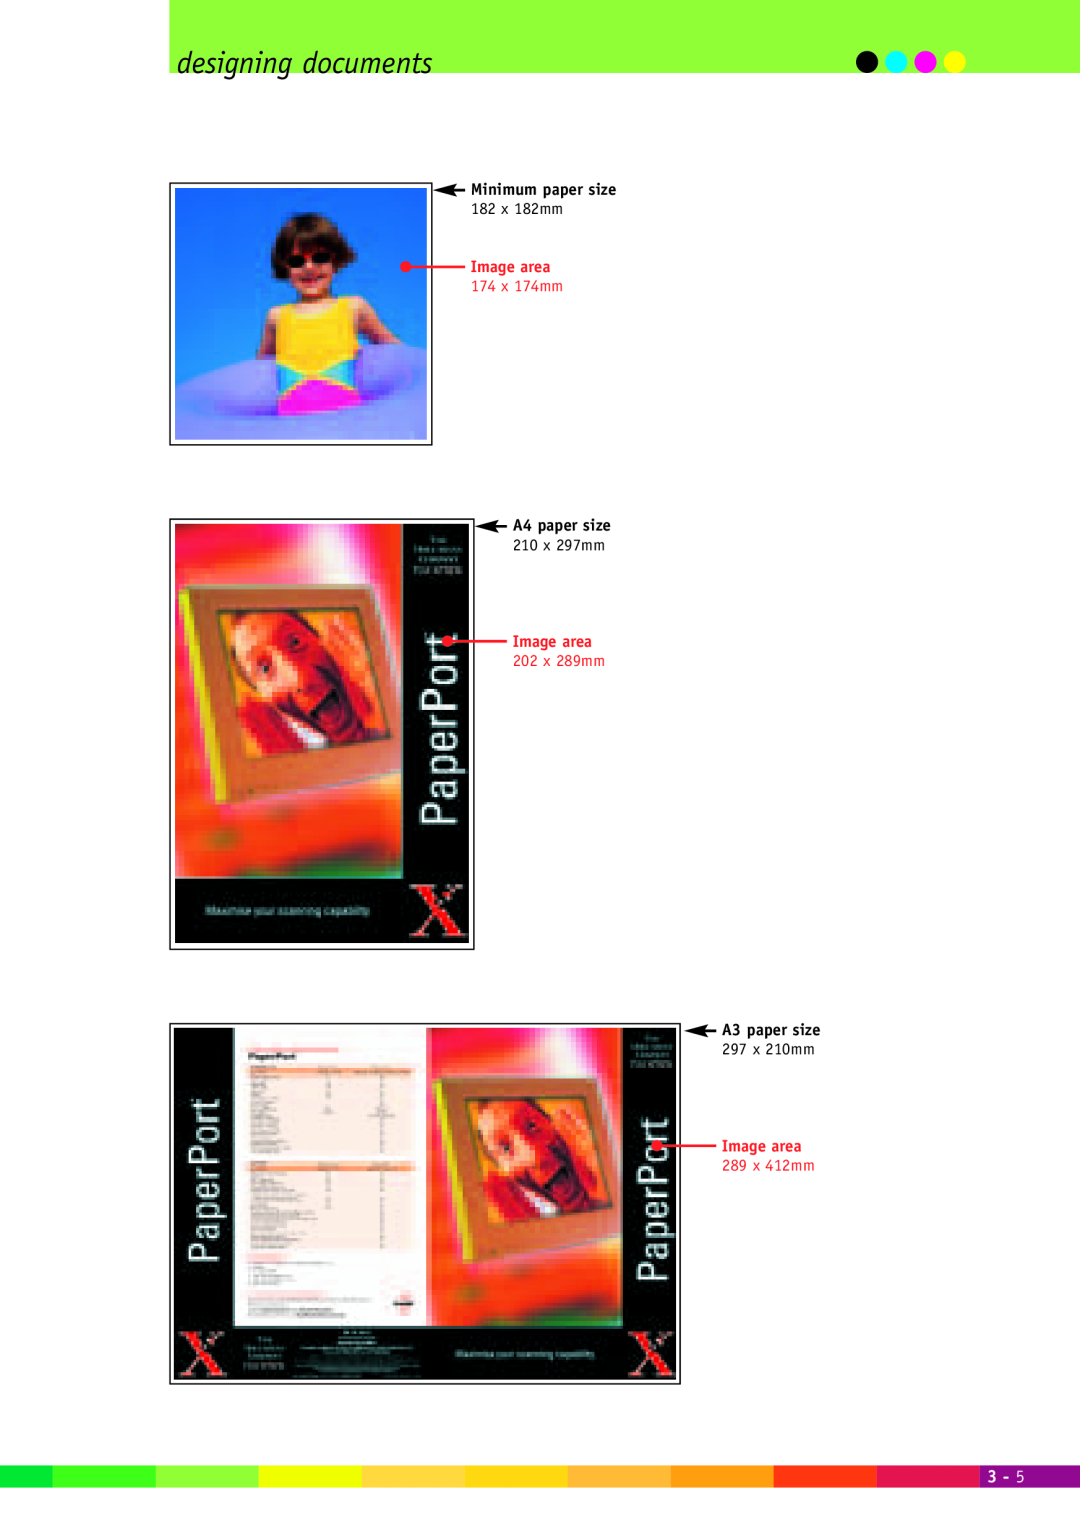 Xerox 2000 manual designing documents, Image area, 174 x 174mm, 202 x 289mm, 289 x 412mm 